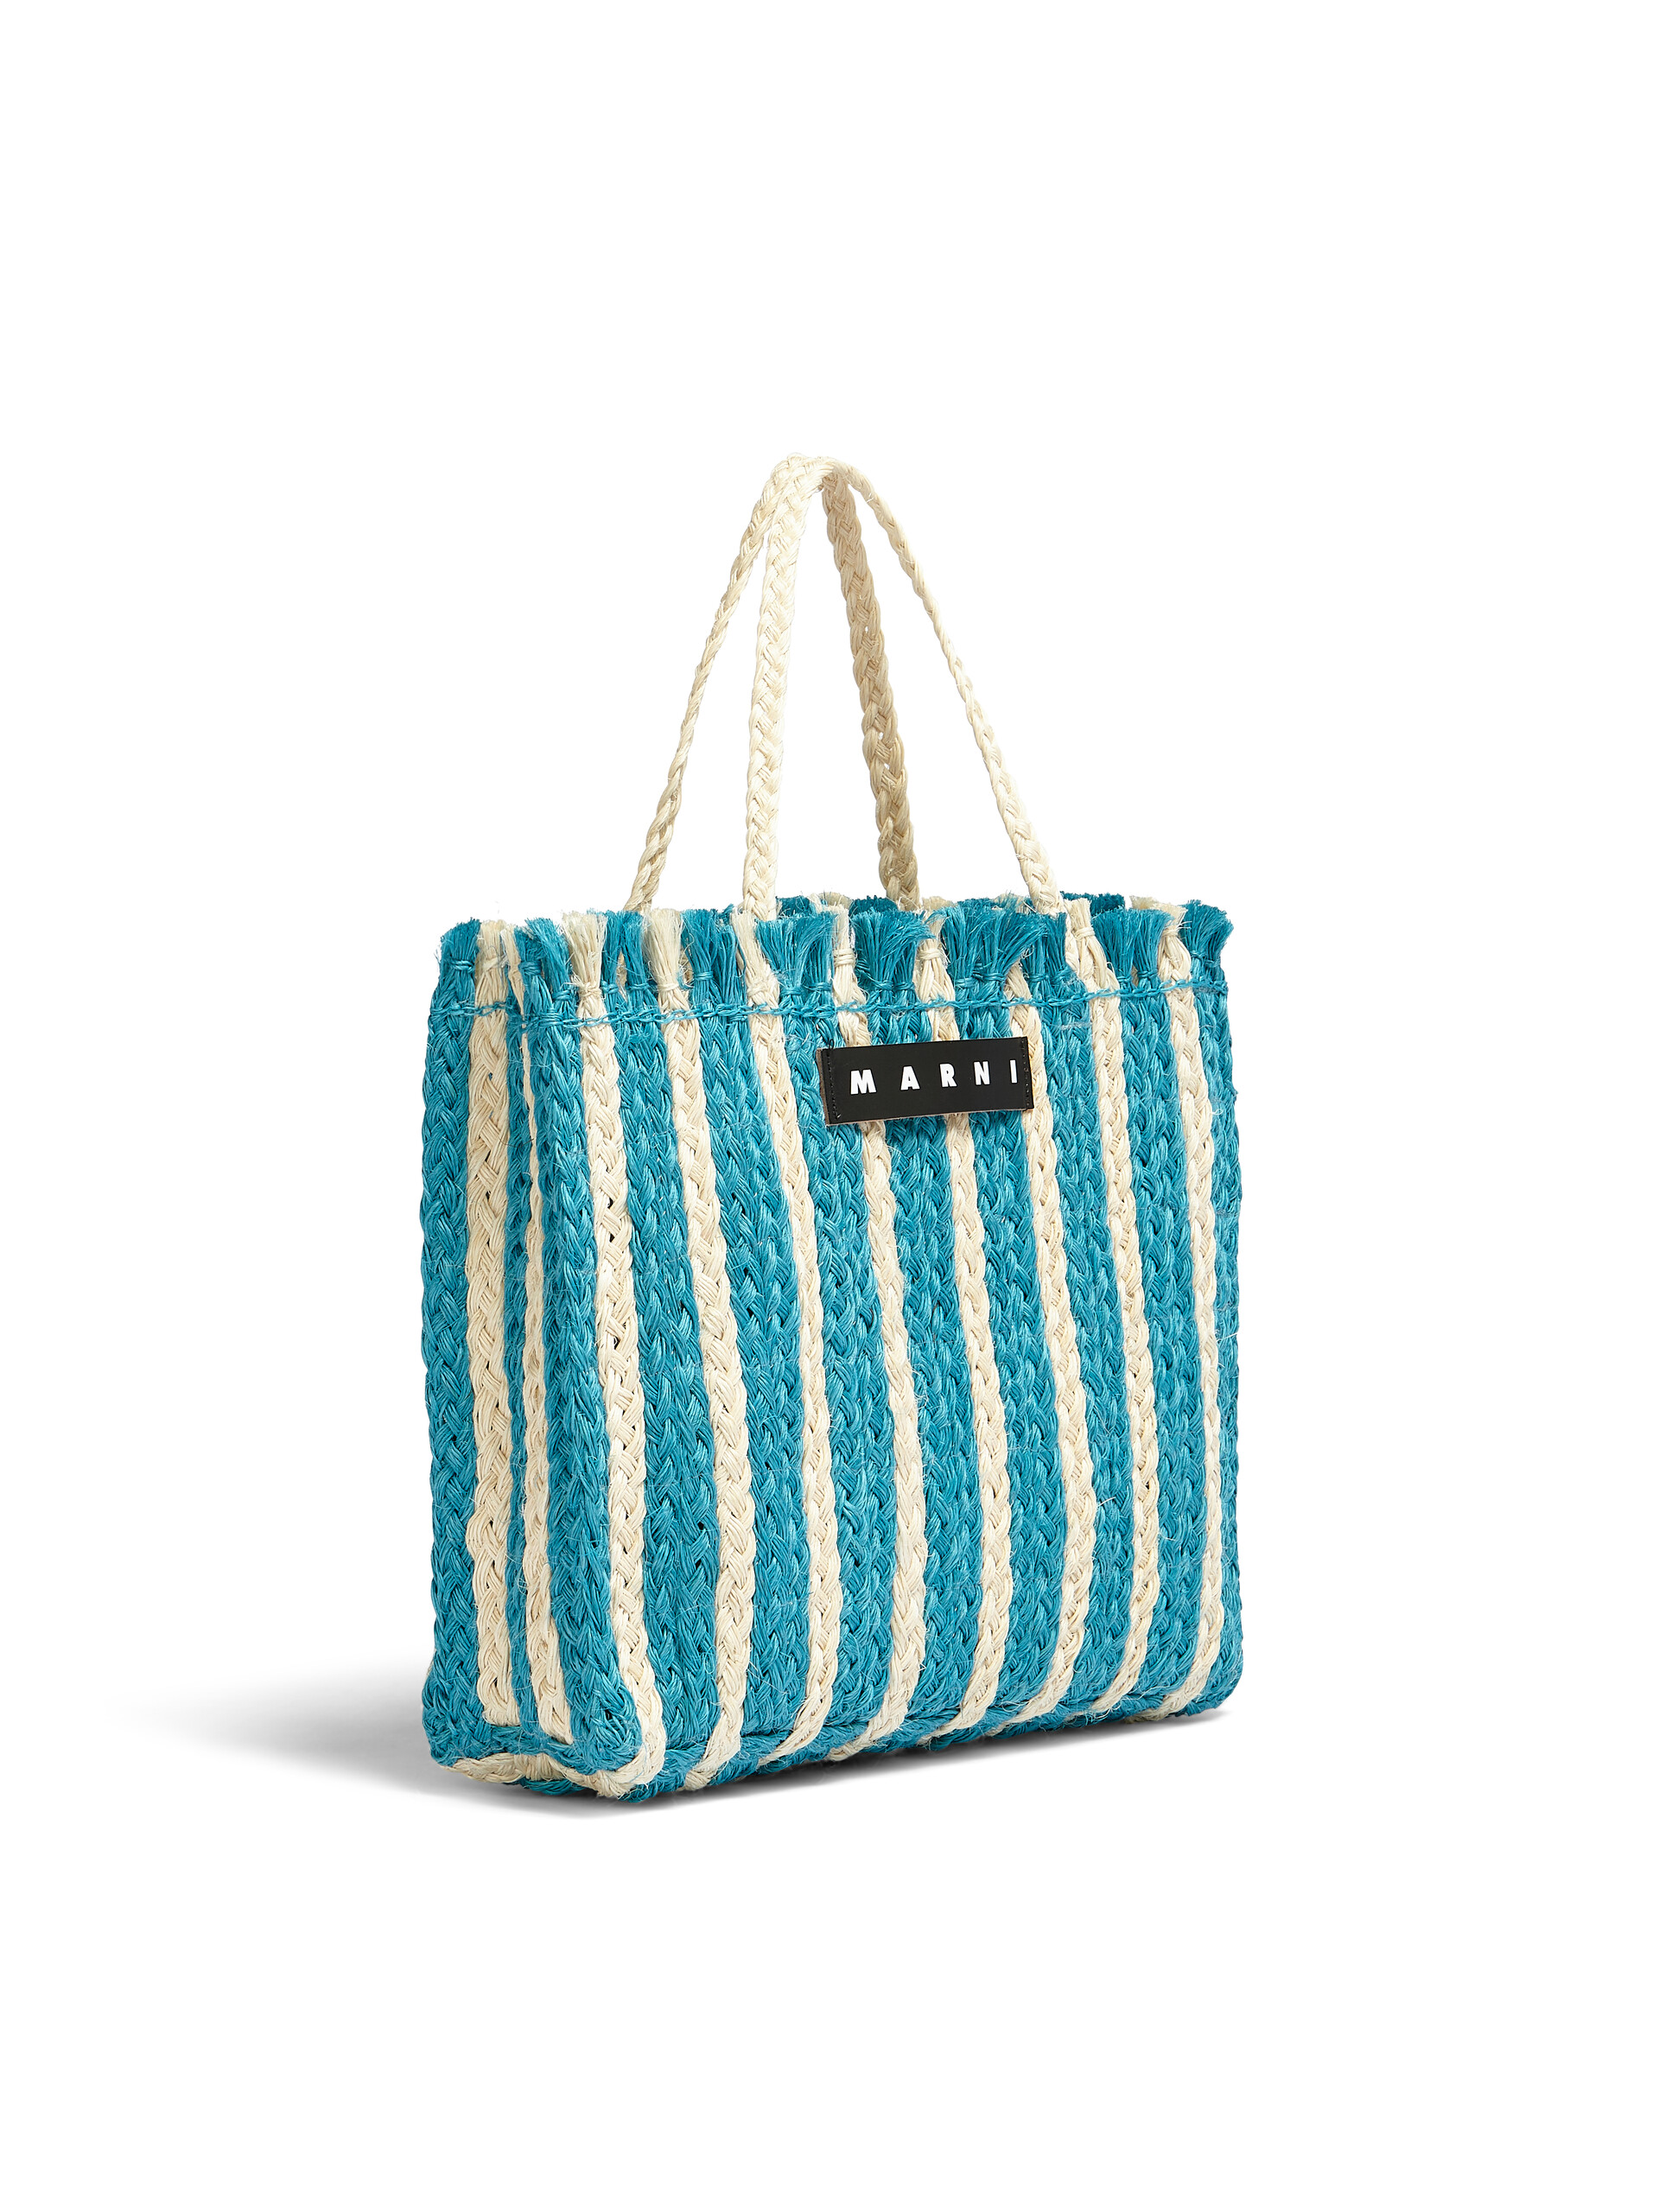 MARNI MARKET bag in pale blue natural fiber - Shopping Bags - Image 2